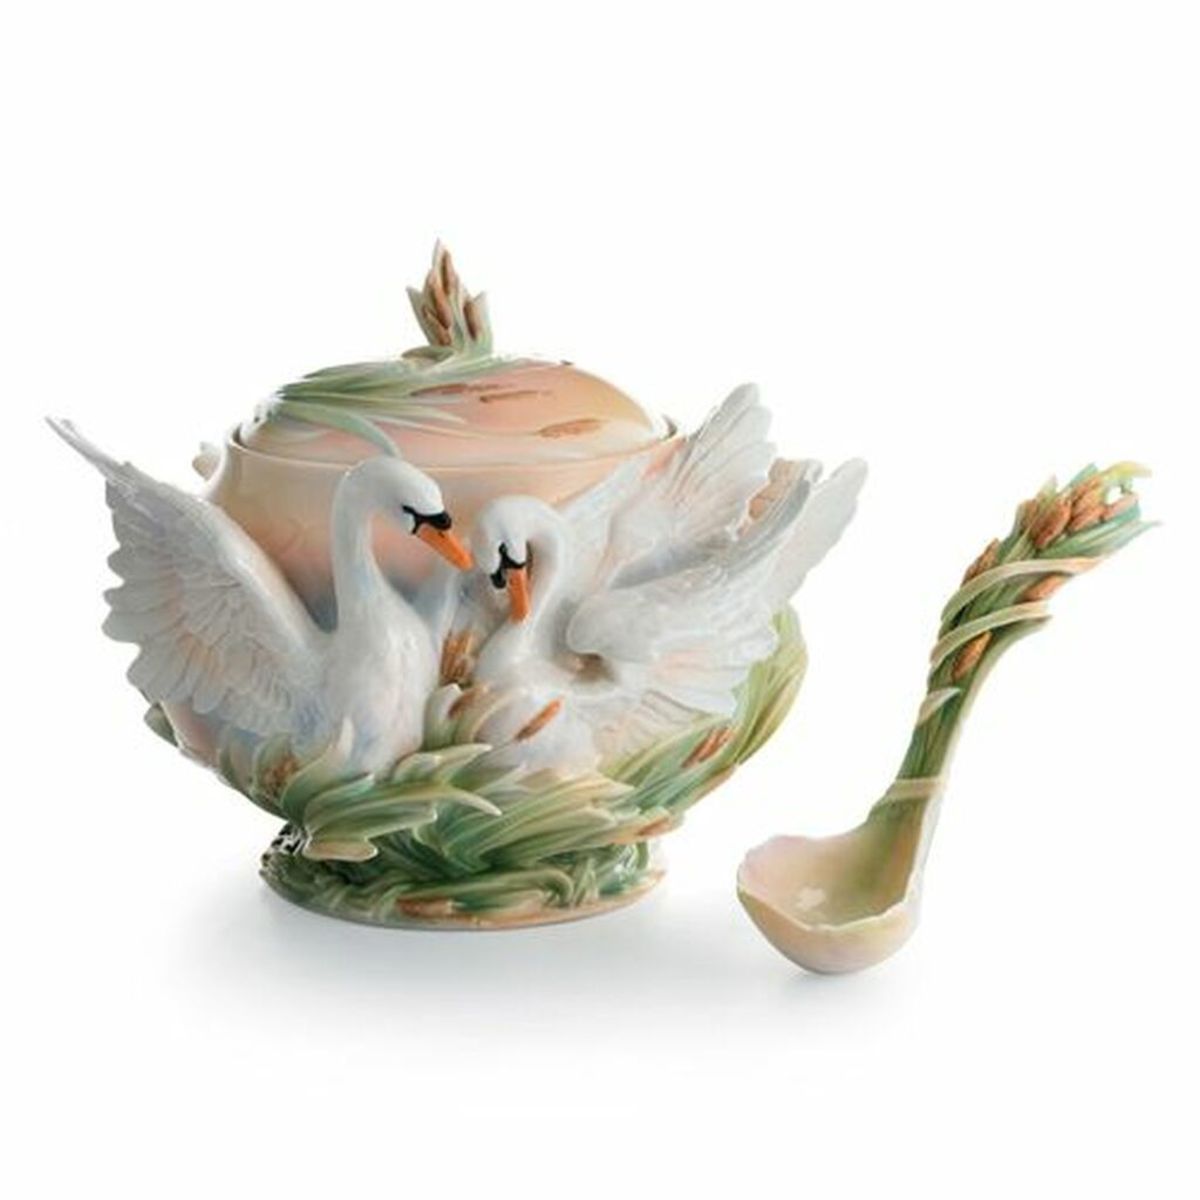 Graceful swans decorate this soup serving piece. Franz Porcelain "Swan Lake" tureen